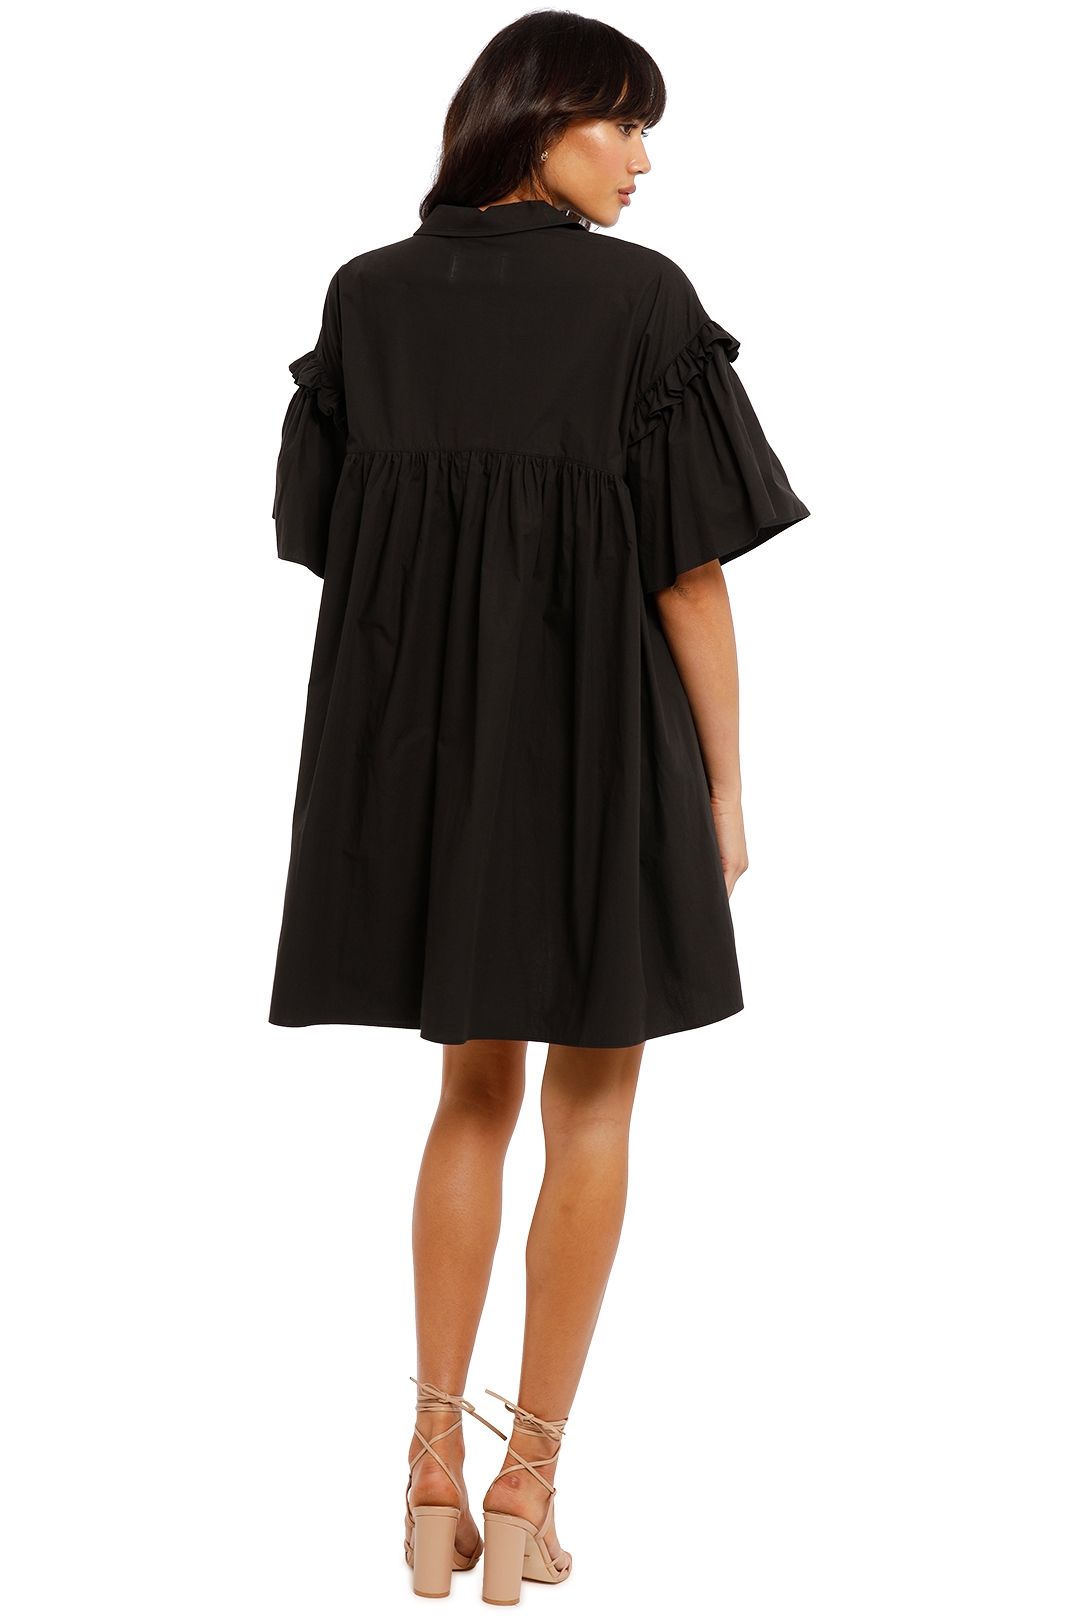 Joslin Ashleigh Smock Mini Dress Black Relaxed Fit